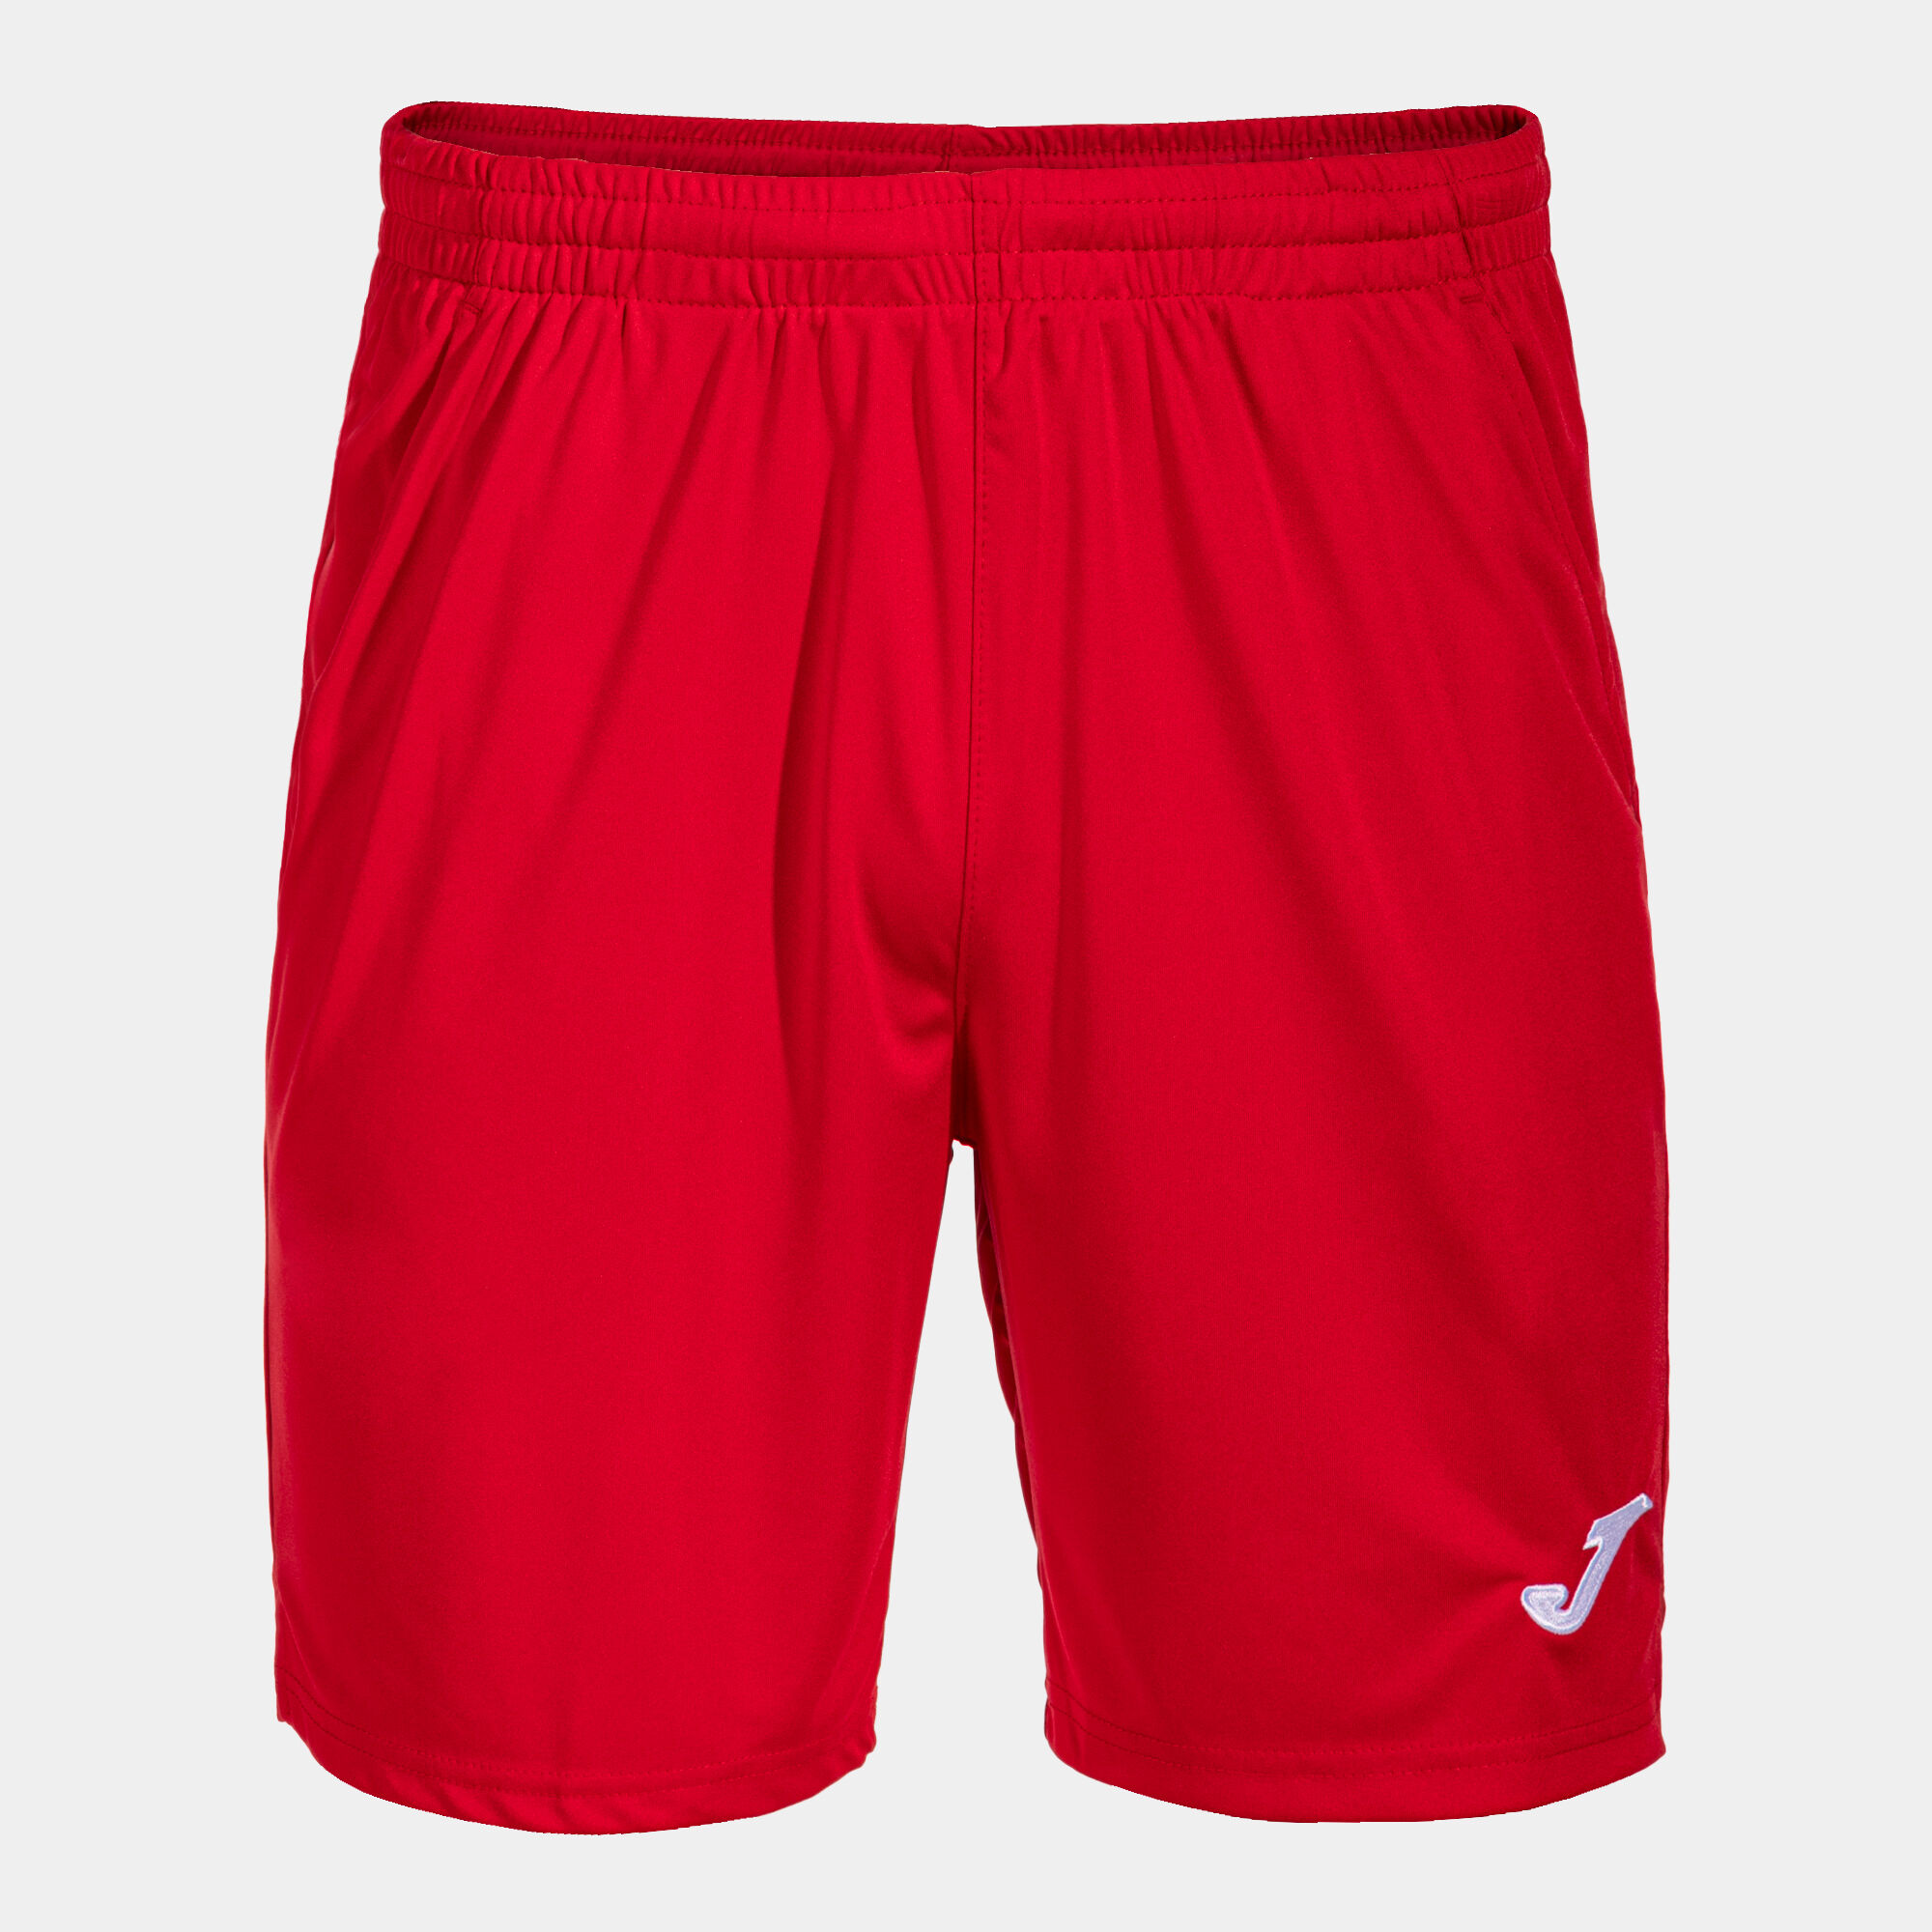 Bermuda shorts man Drive red